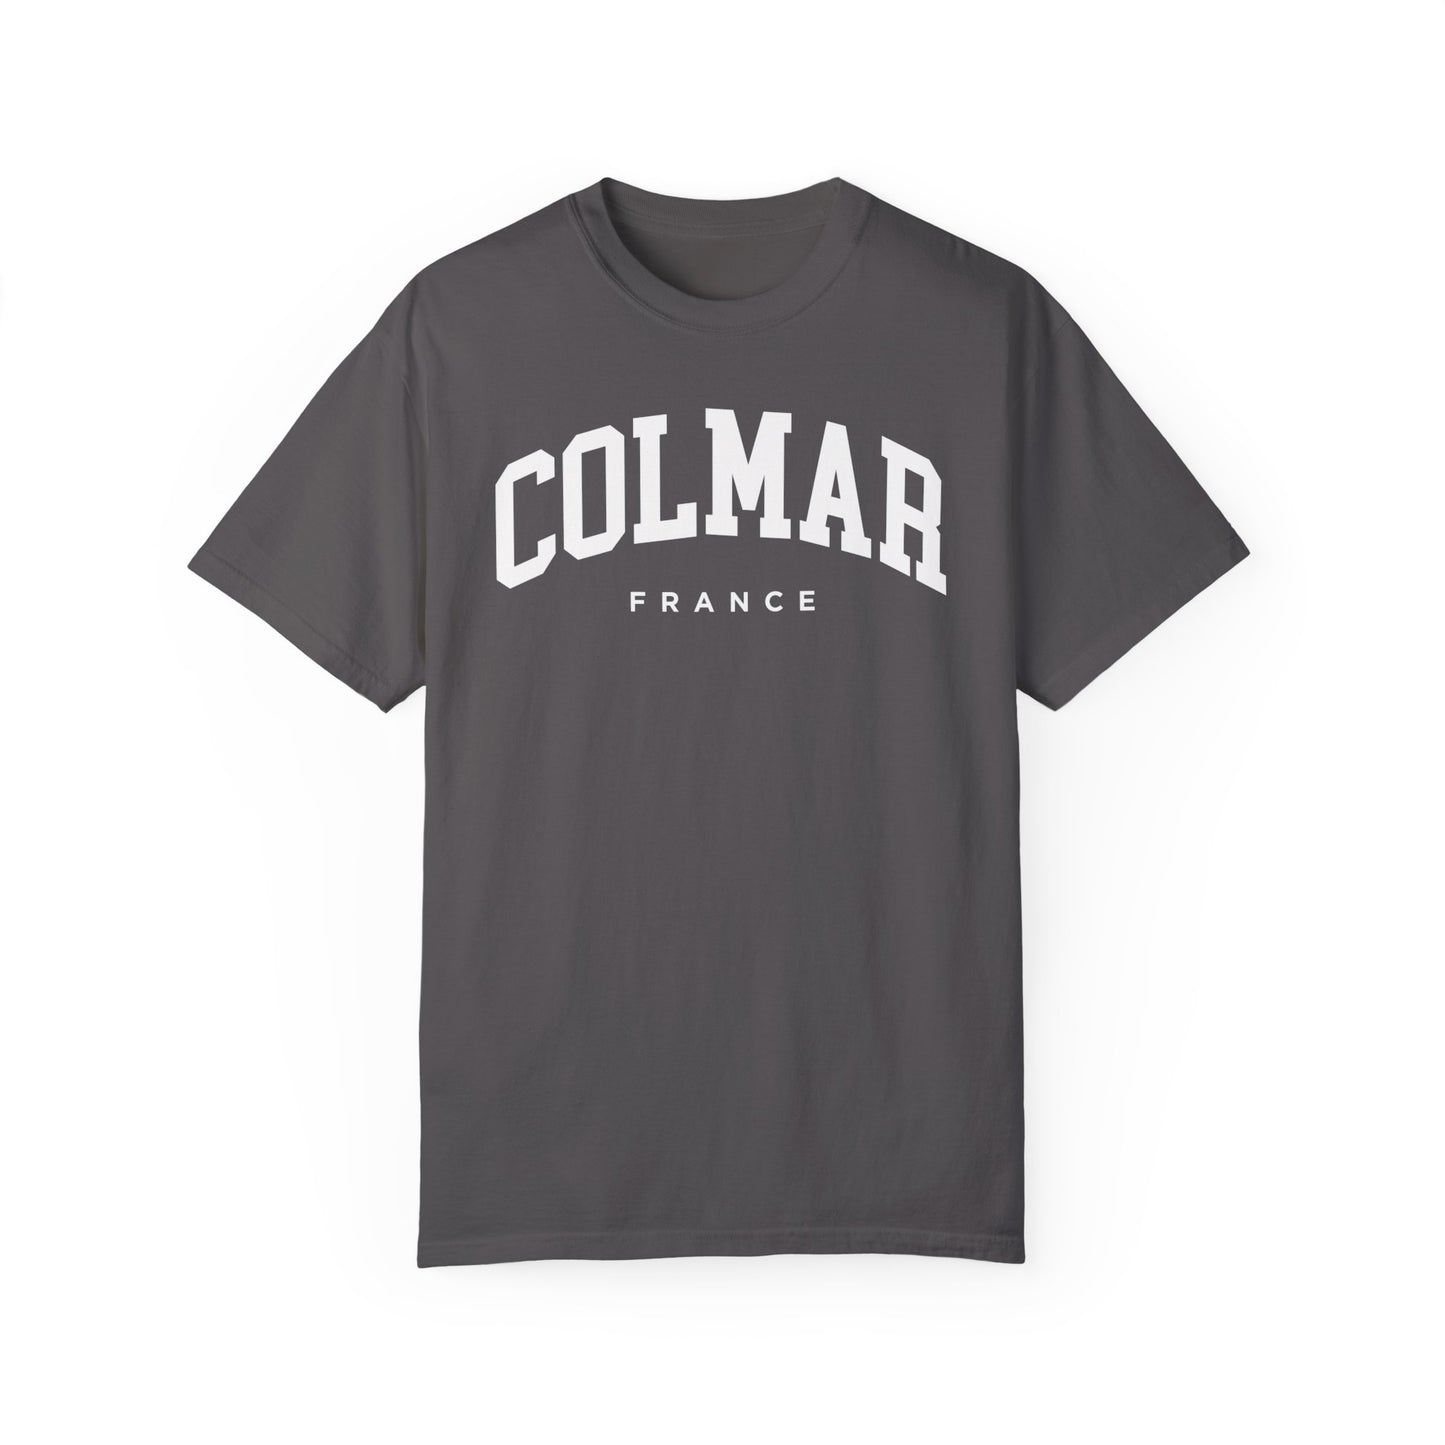 Colmar France Comfort Colors® Tee